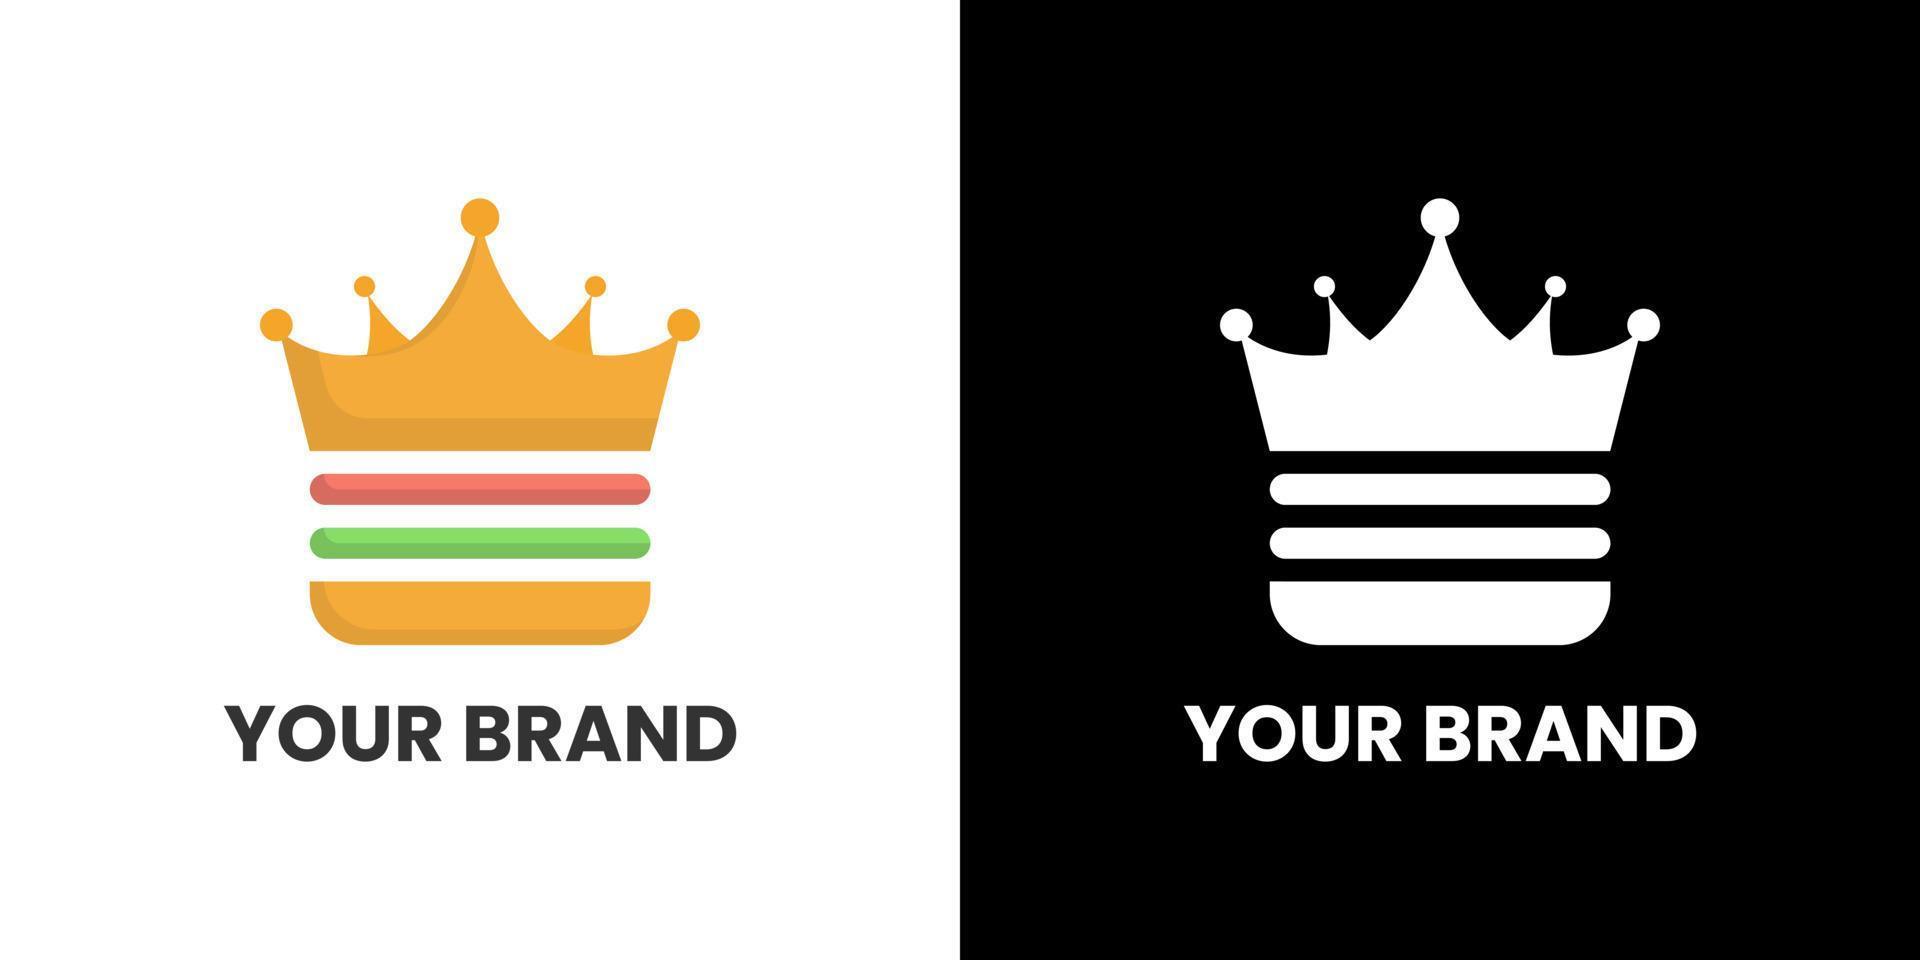 hamburger voedsel koning koningin kroon minimalistische logo ontwerp merk identiteit familie samenspel collega's emblemen logotype symbolen. vector